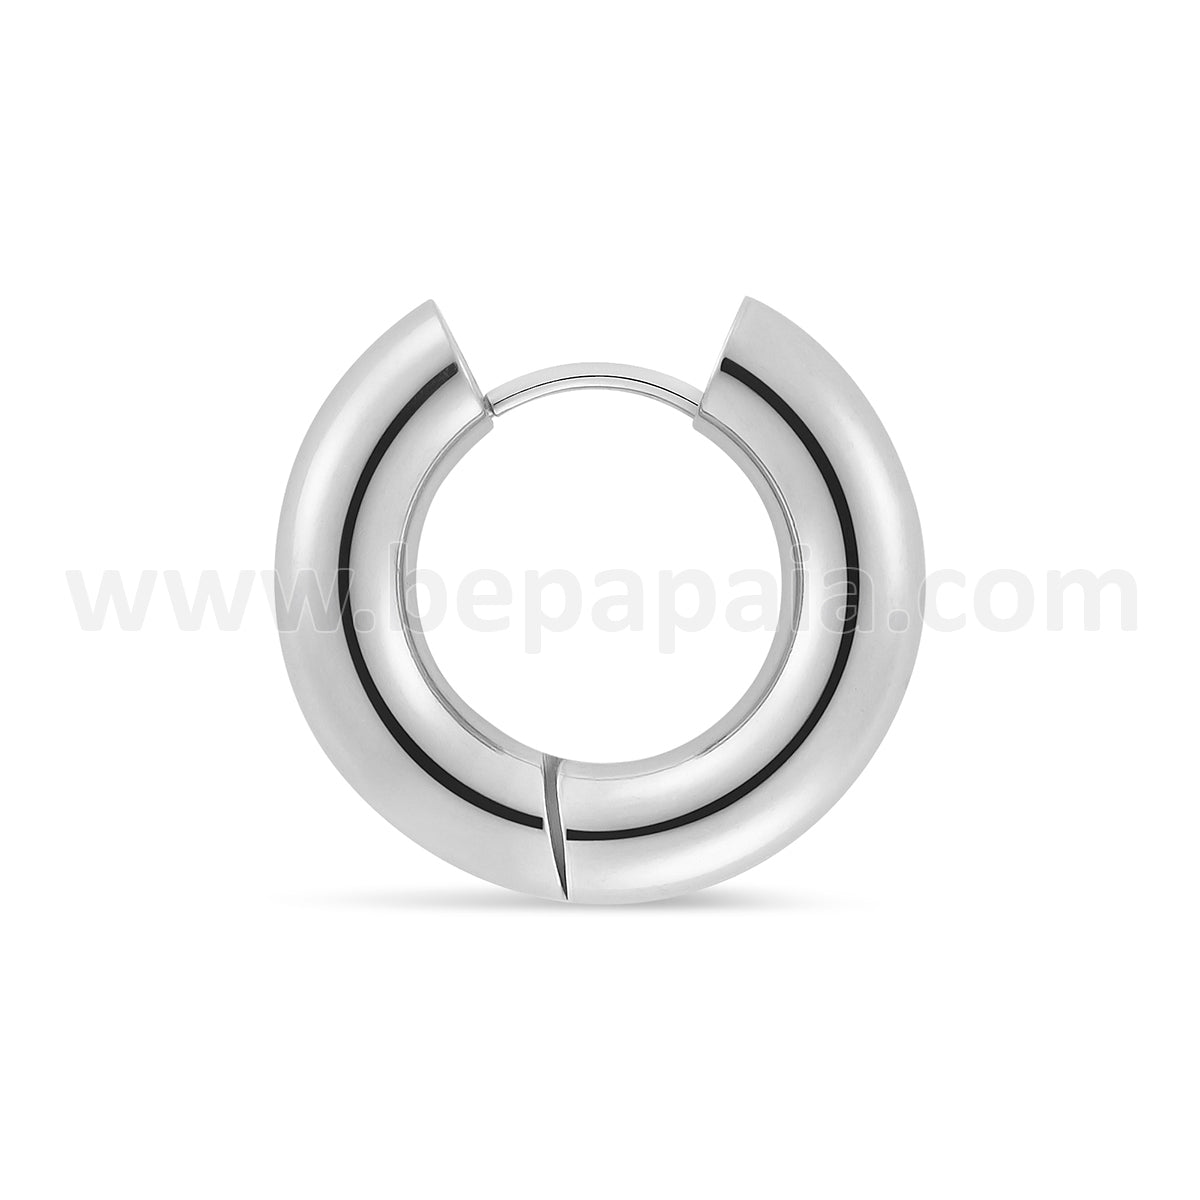 Stainless steel thick hoop earring